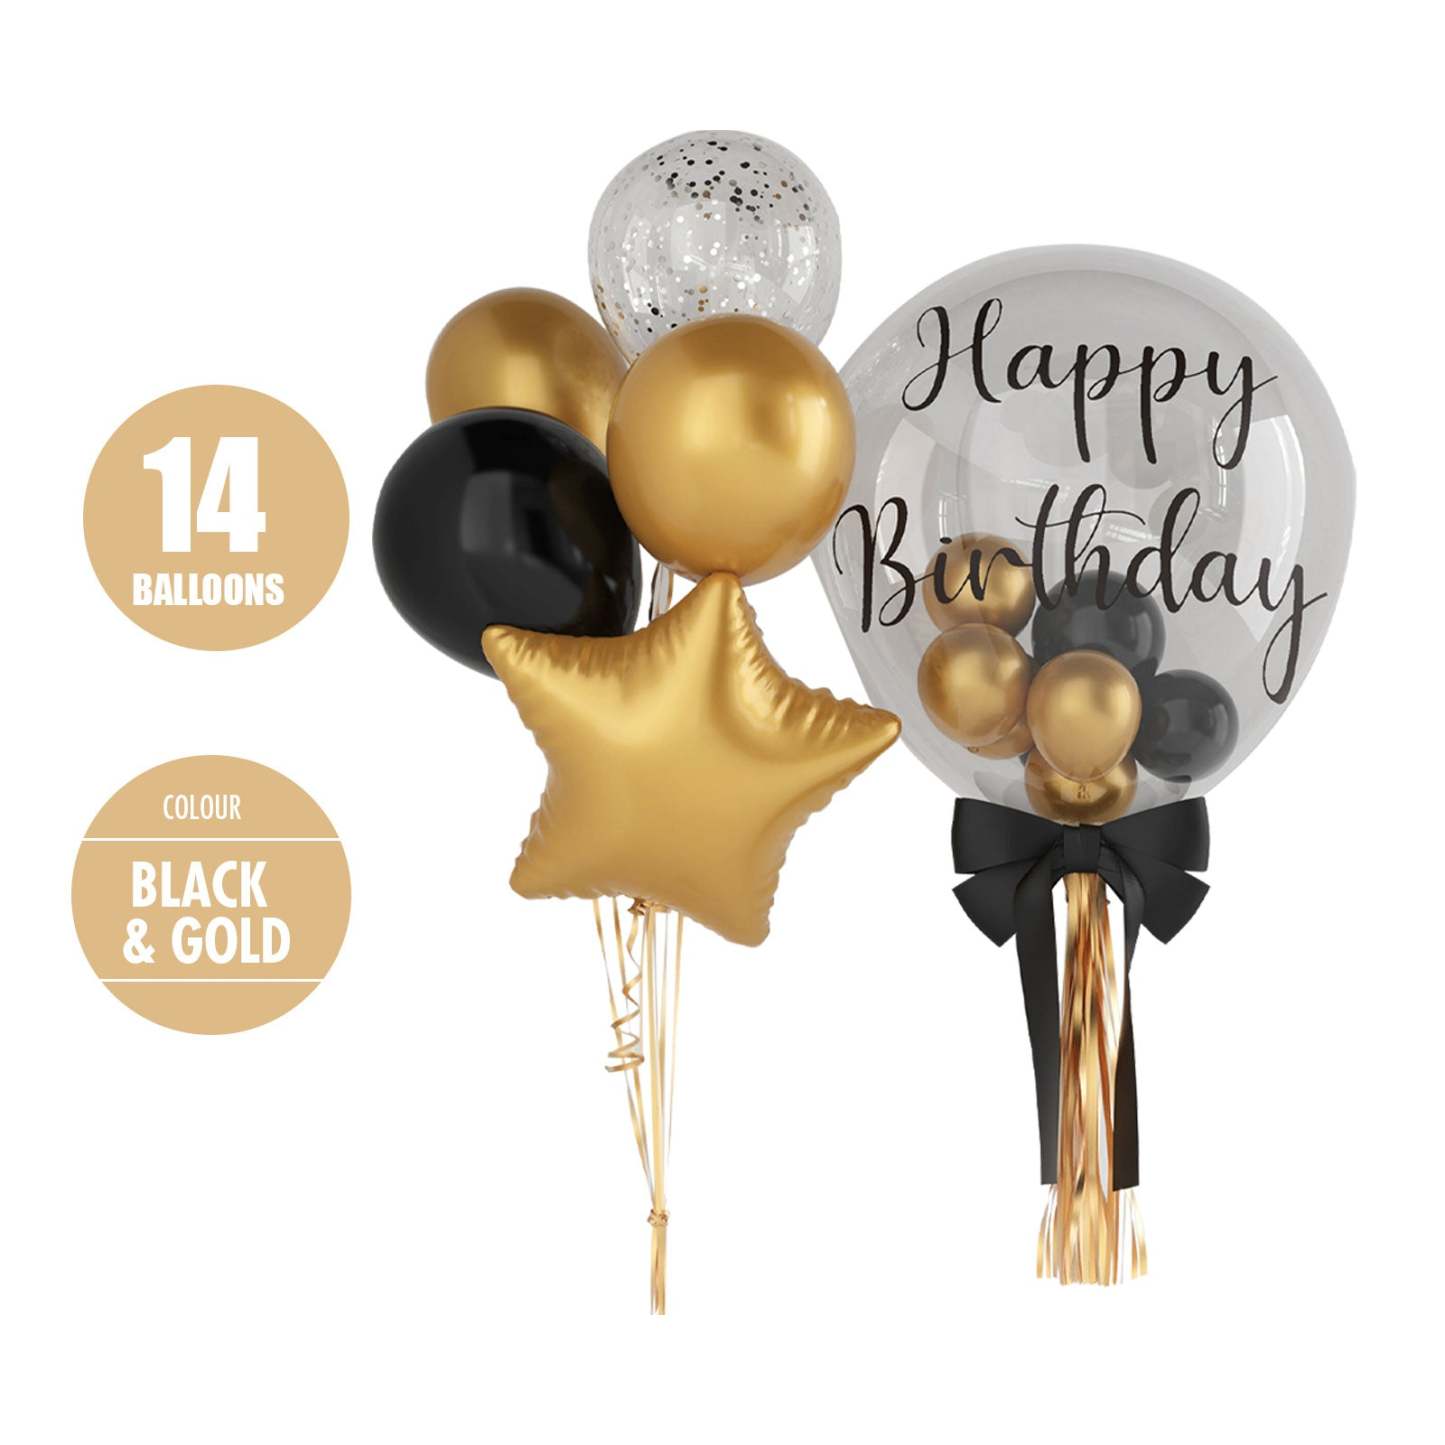 HOUZE -14pcs 'Happy Birthday'  Bubble Balloon Bouquet (Black & Gold | 24")